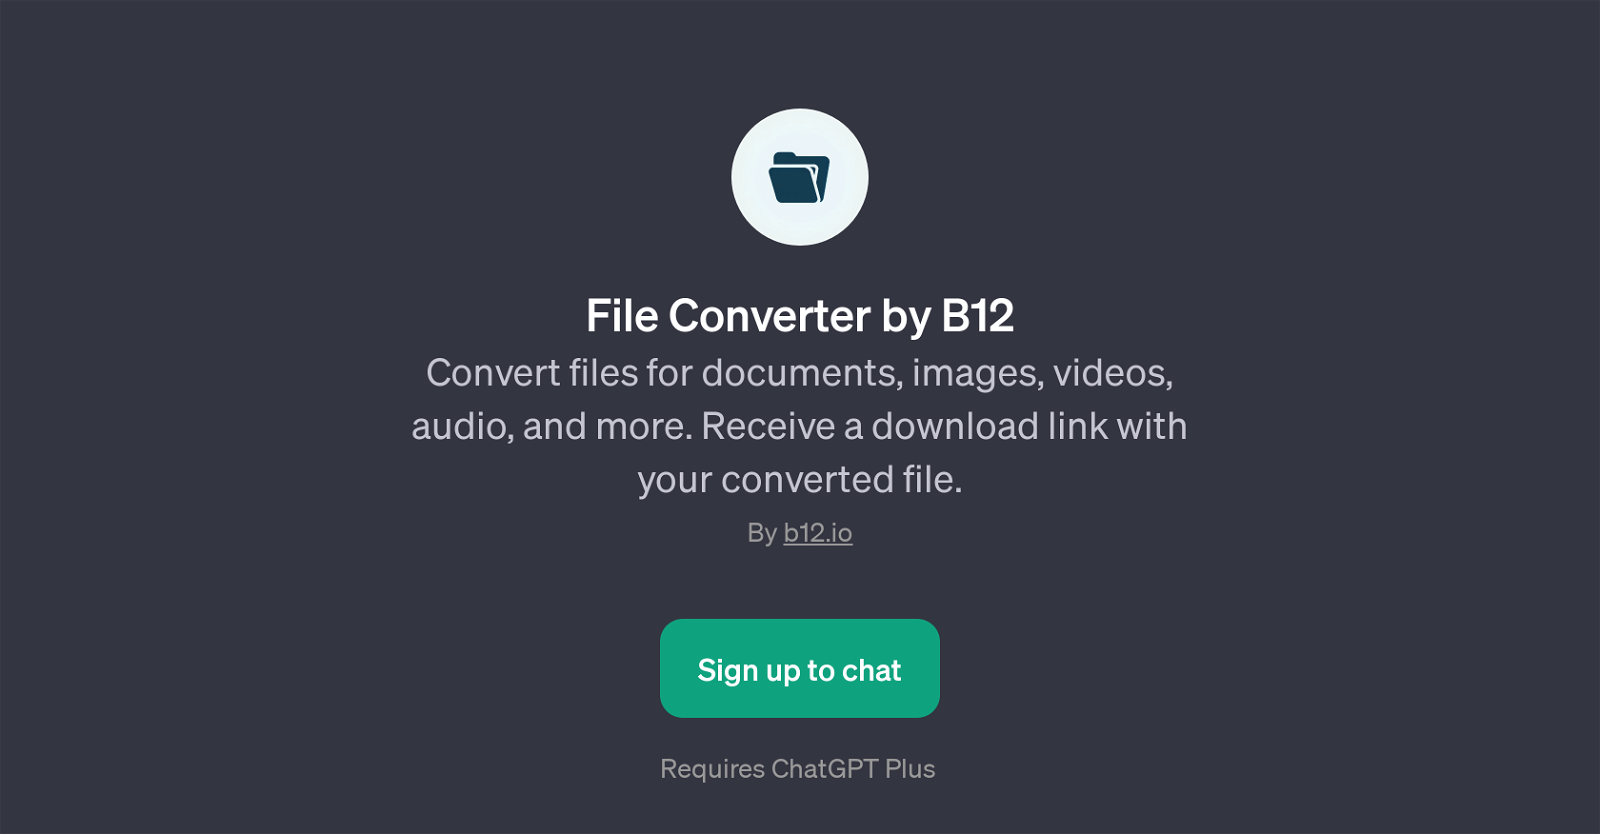 File Converter by B12 website